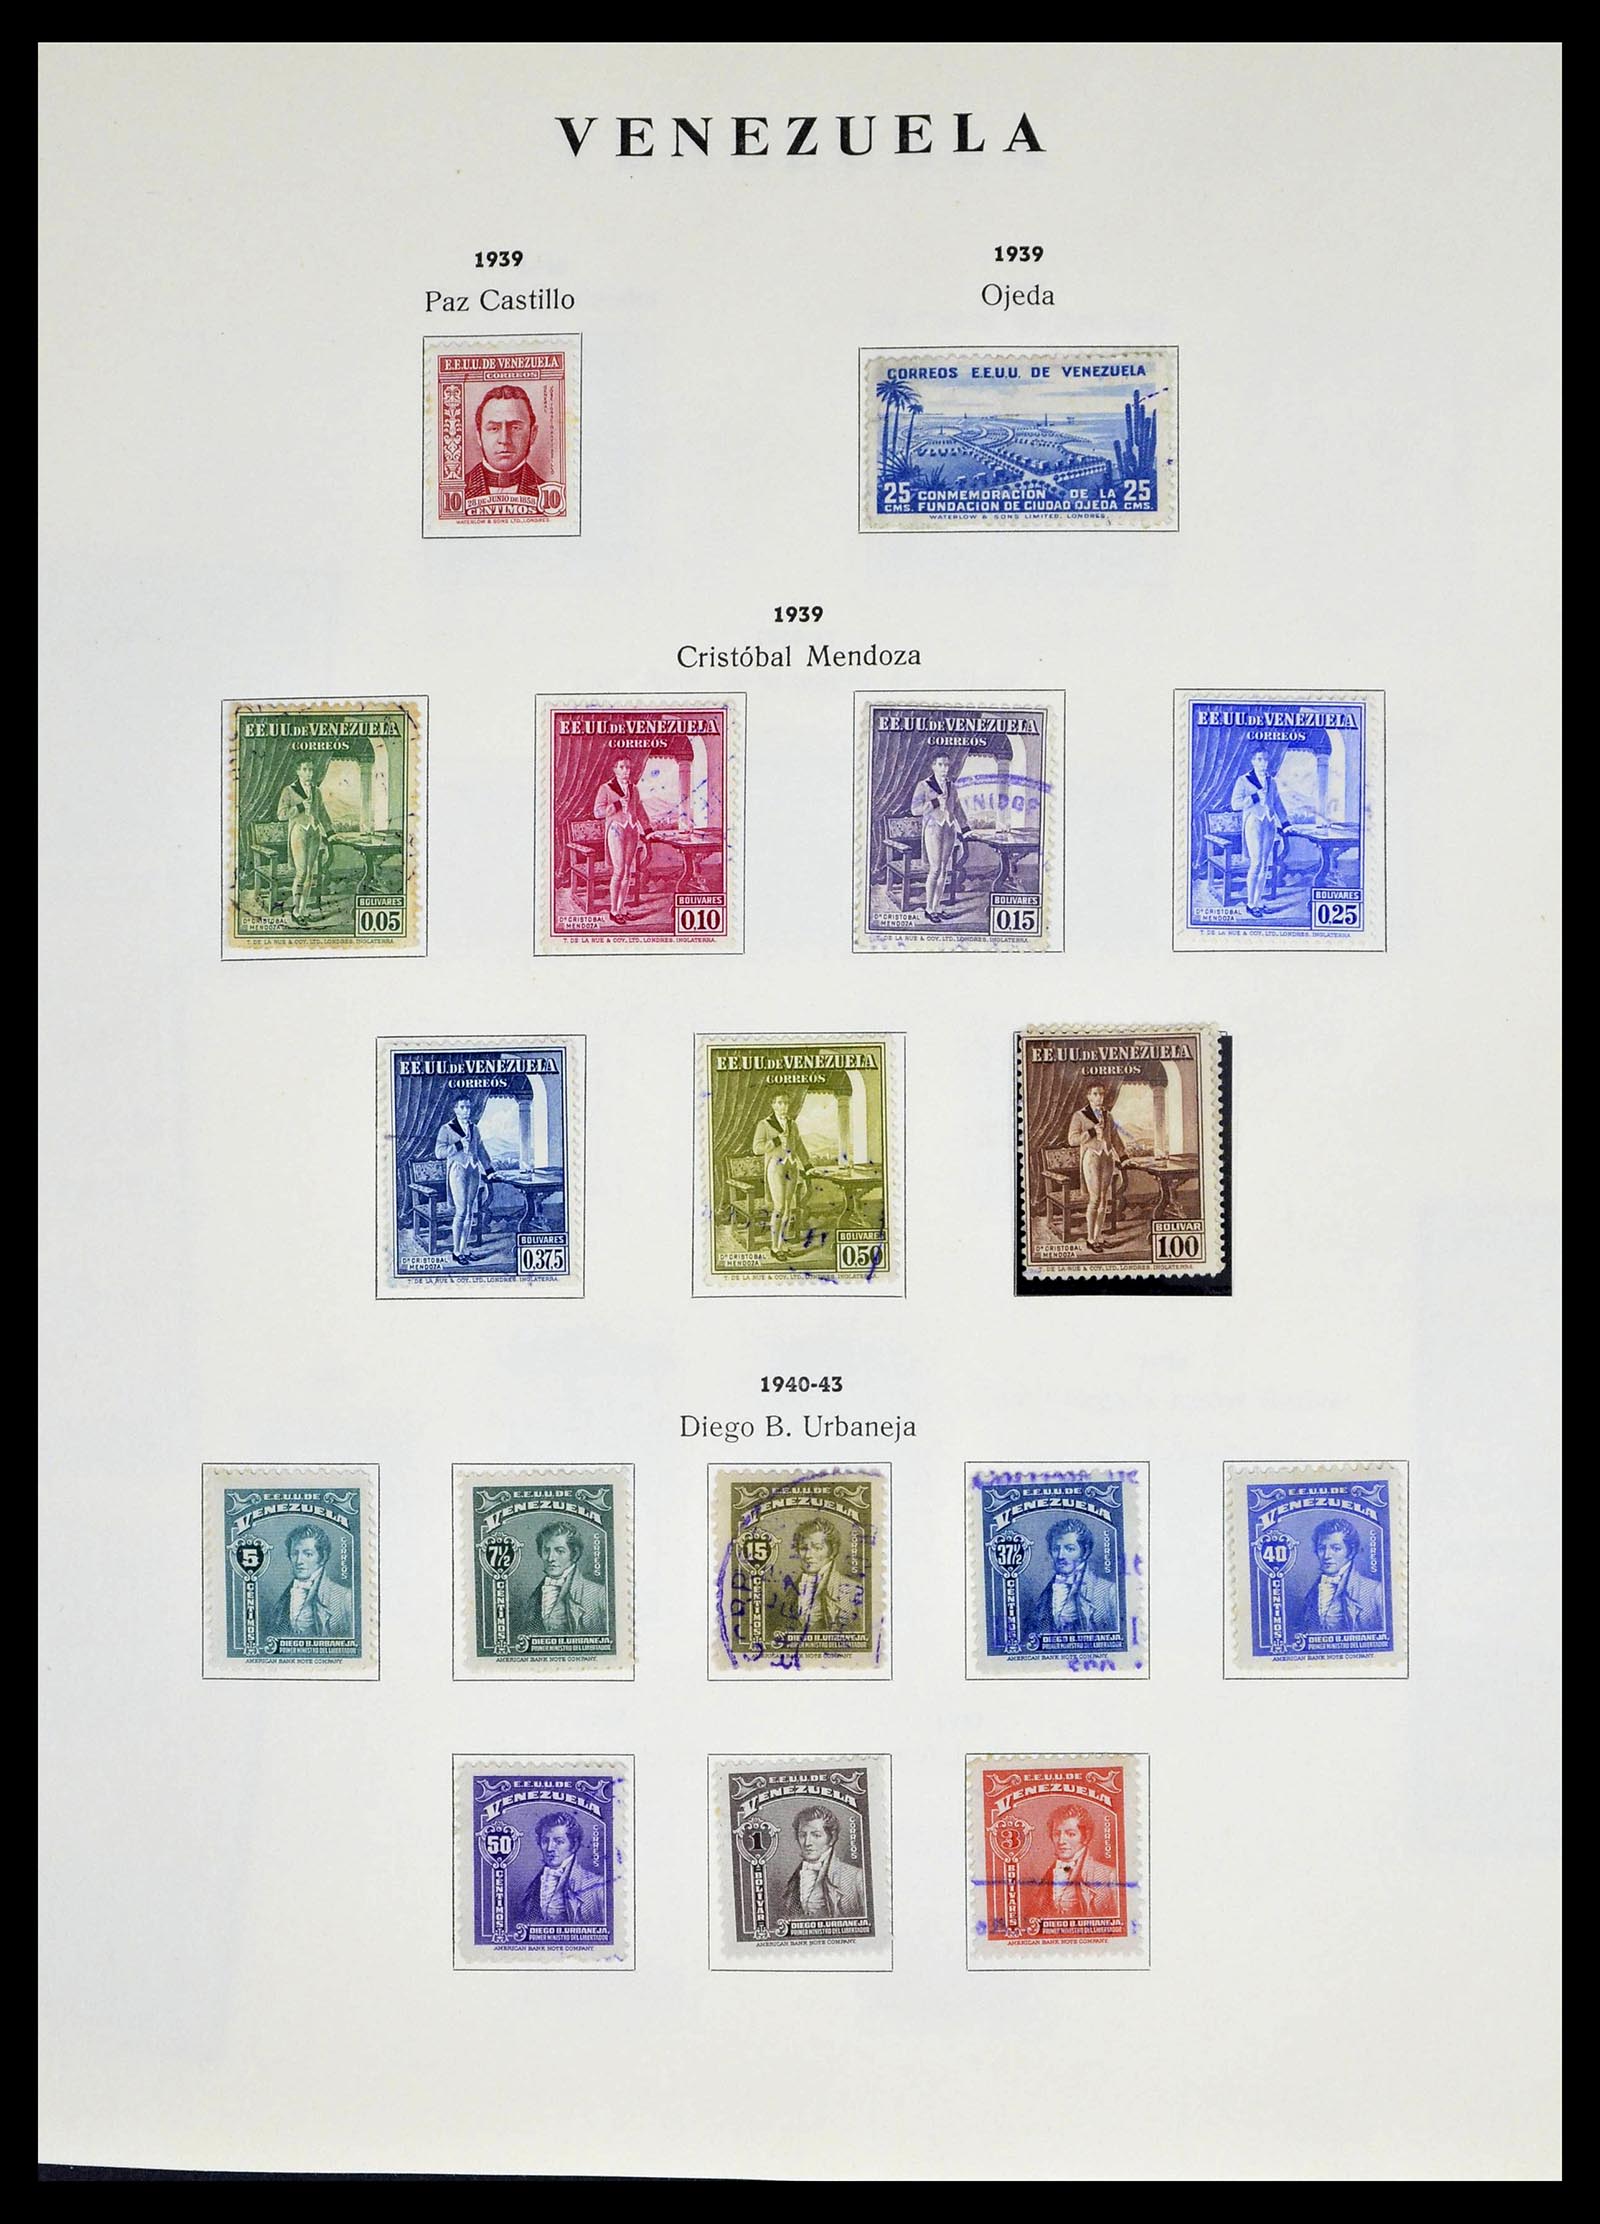 39223 0015 - Stamp collection 39223 Venezuela 1859-1984.